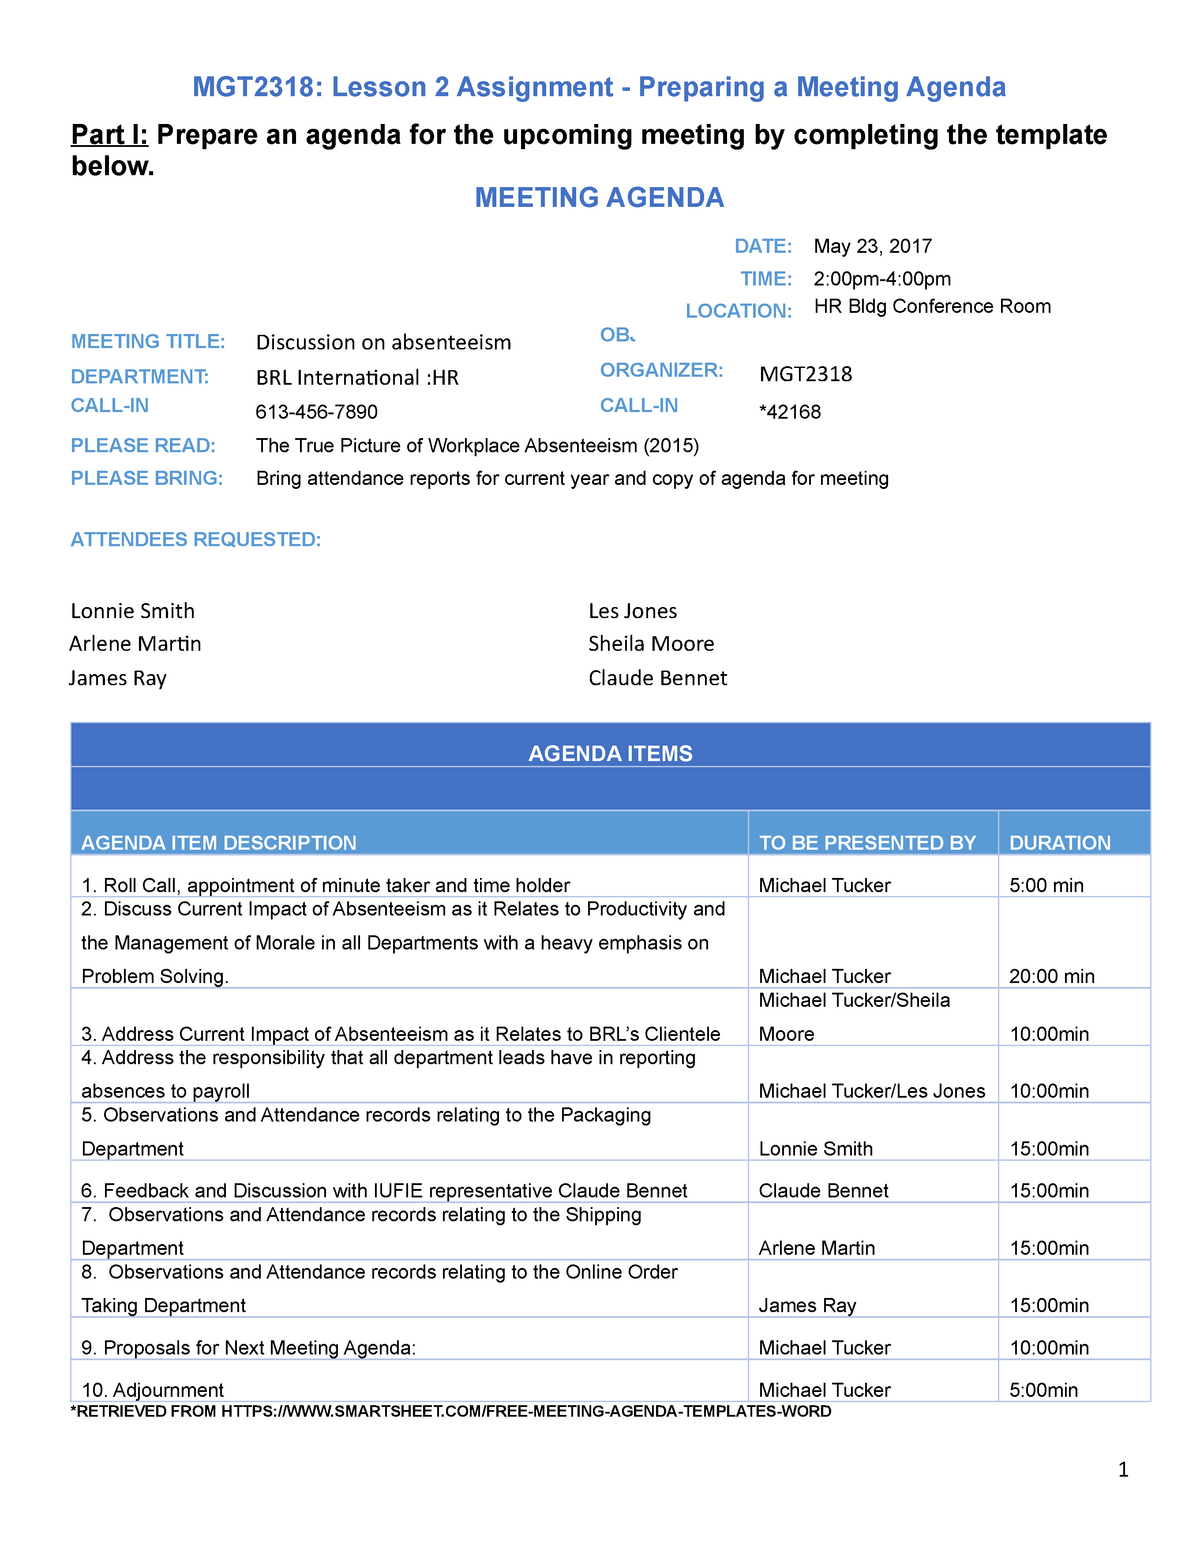 Q Attachment 4 Simple Meeting Agenda Template M Mgt2318 Studocu